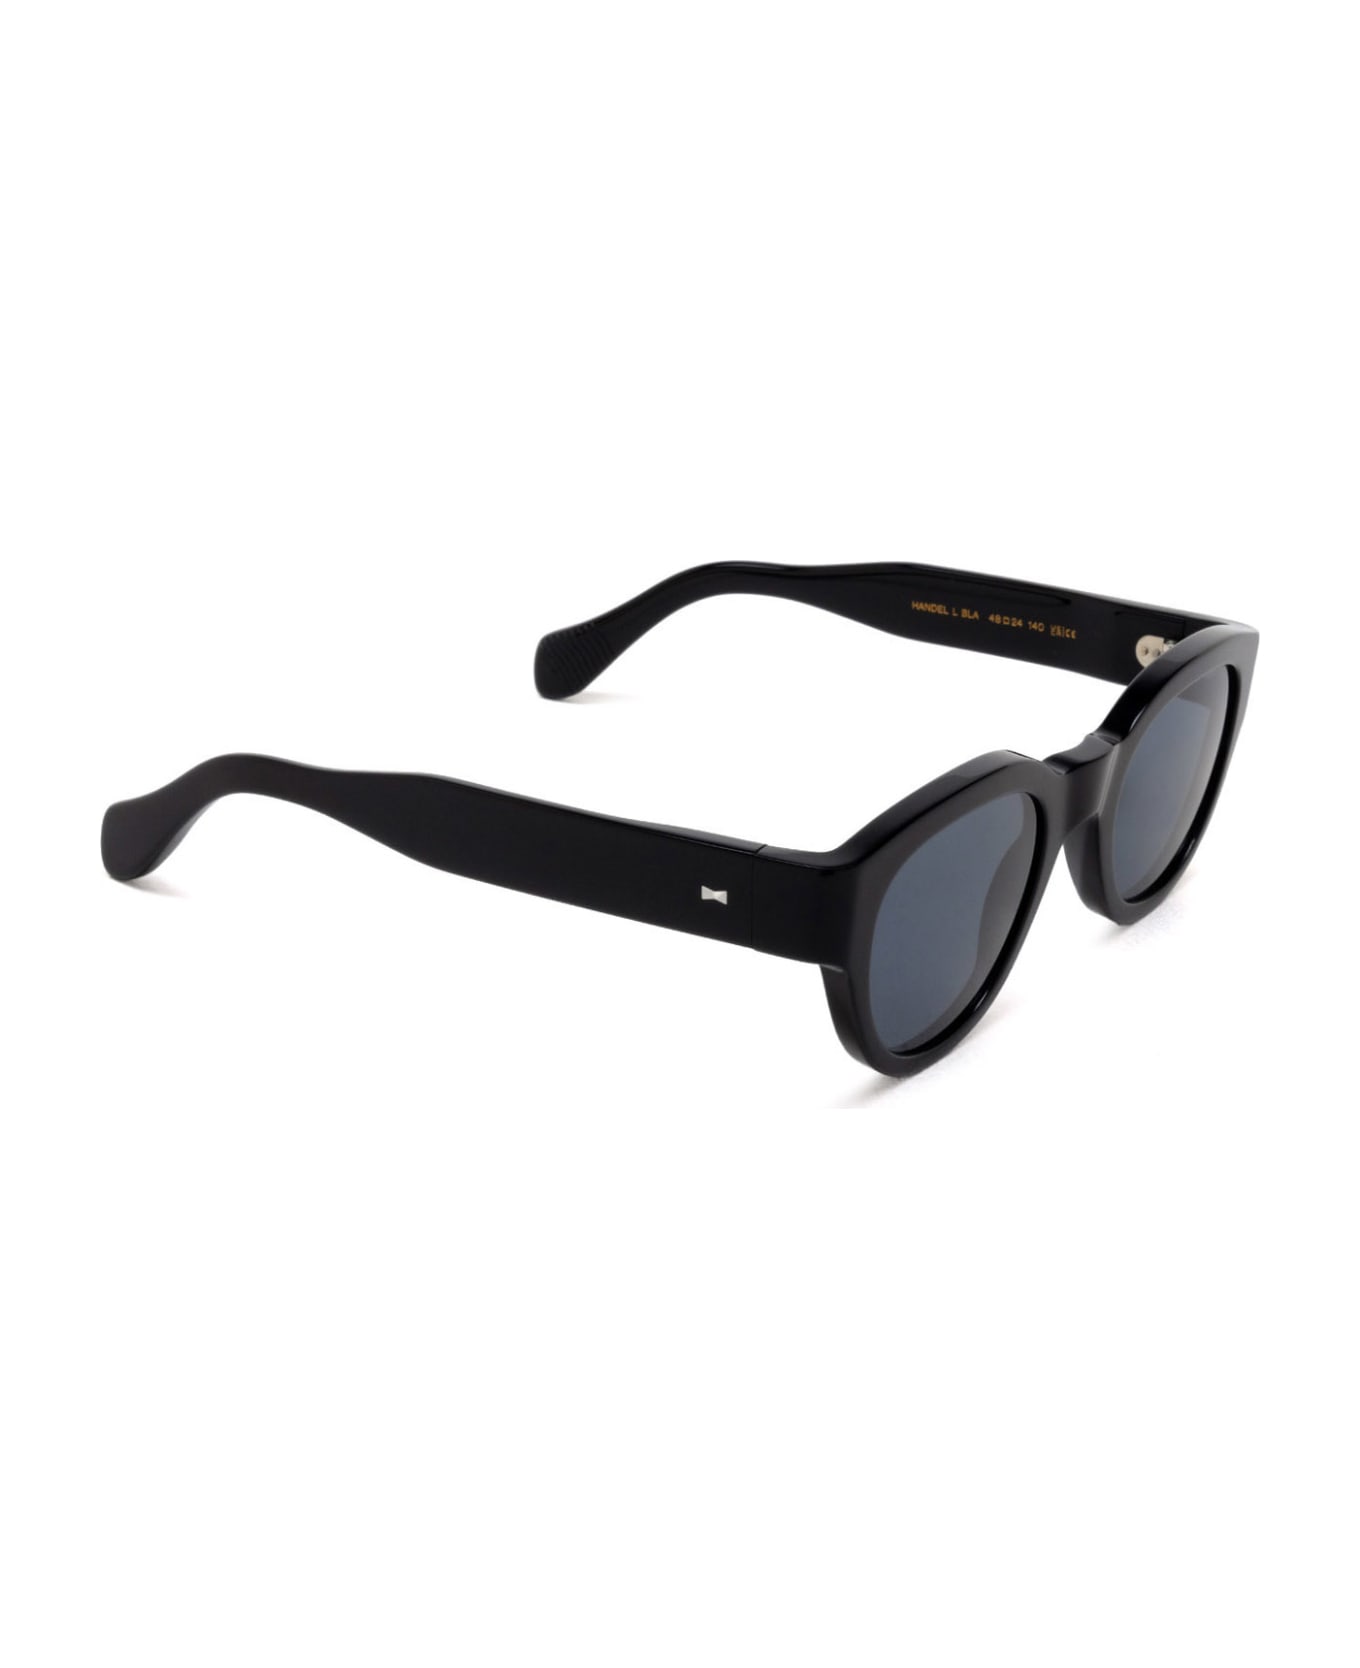 Cubitts Handel Sun Black Sunglasses - Black